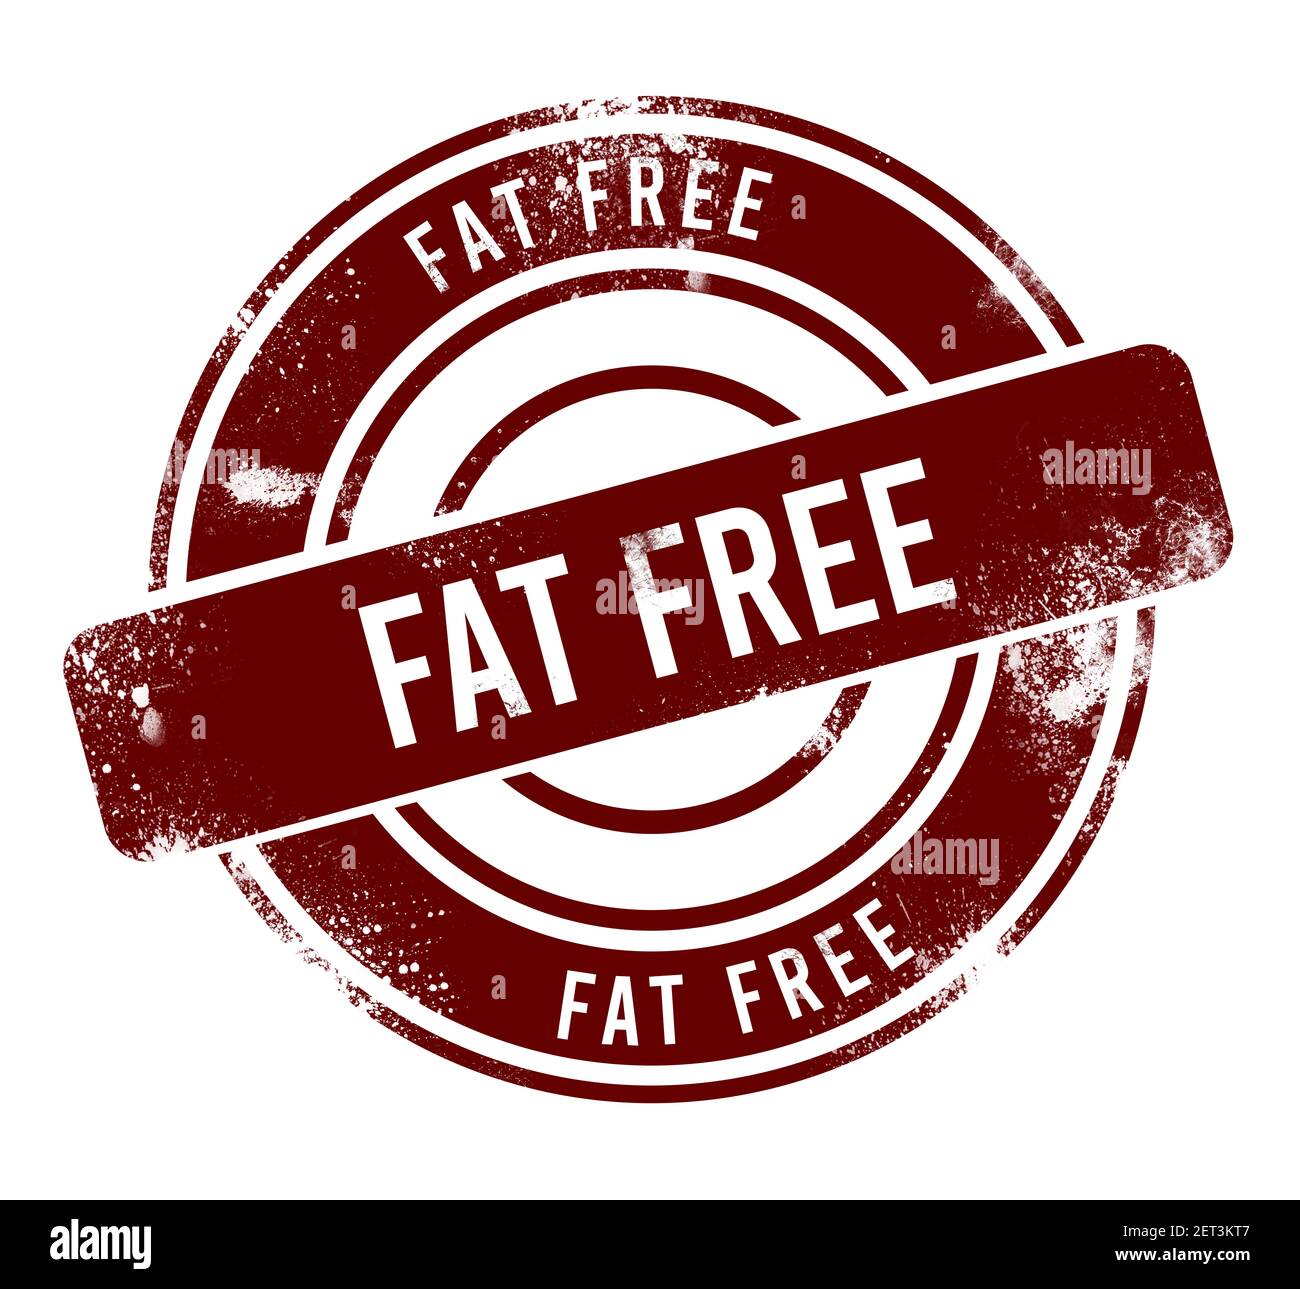 Fat free - red round grunge button, stamp Stock Photo